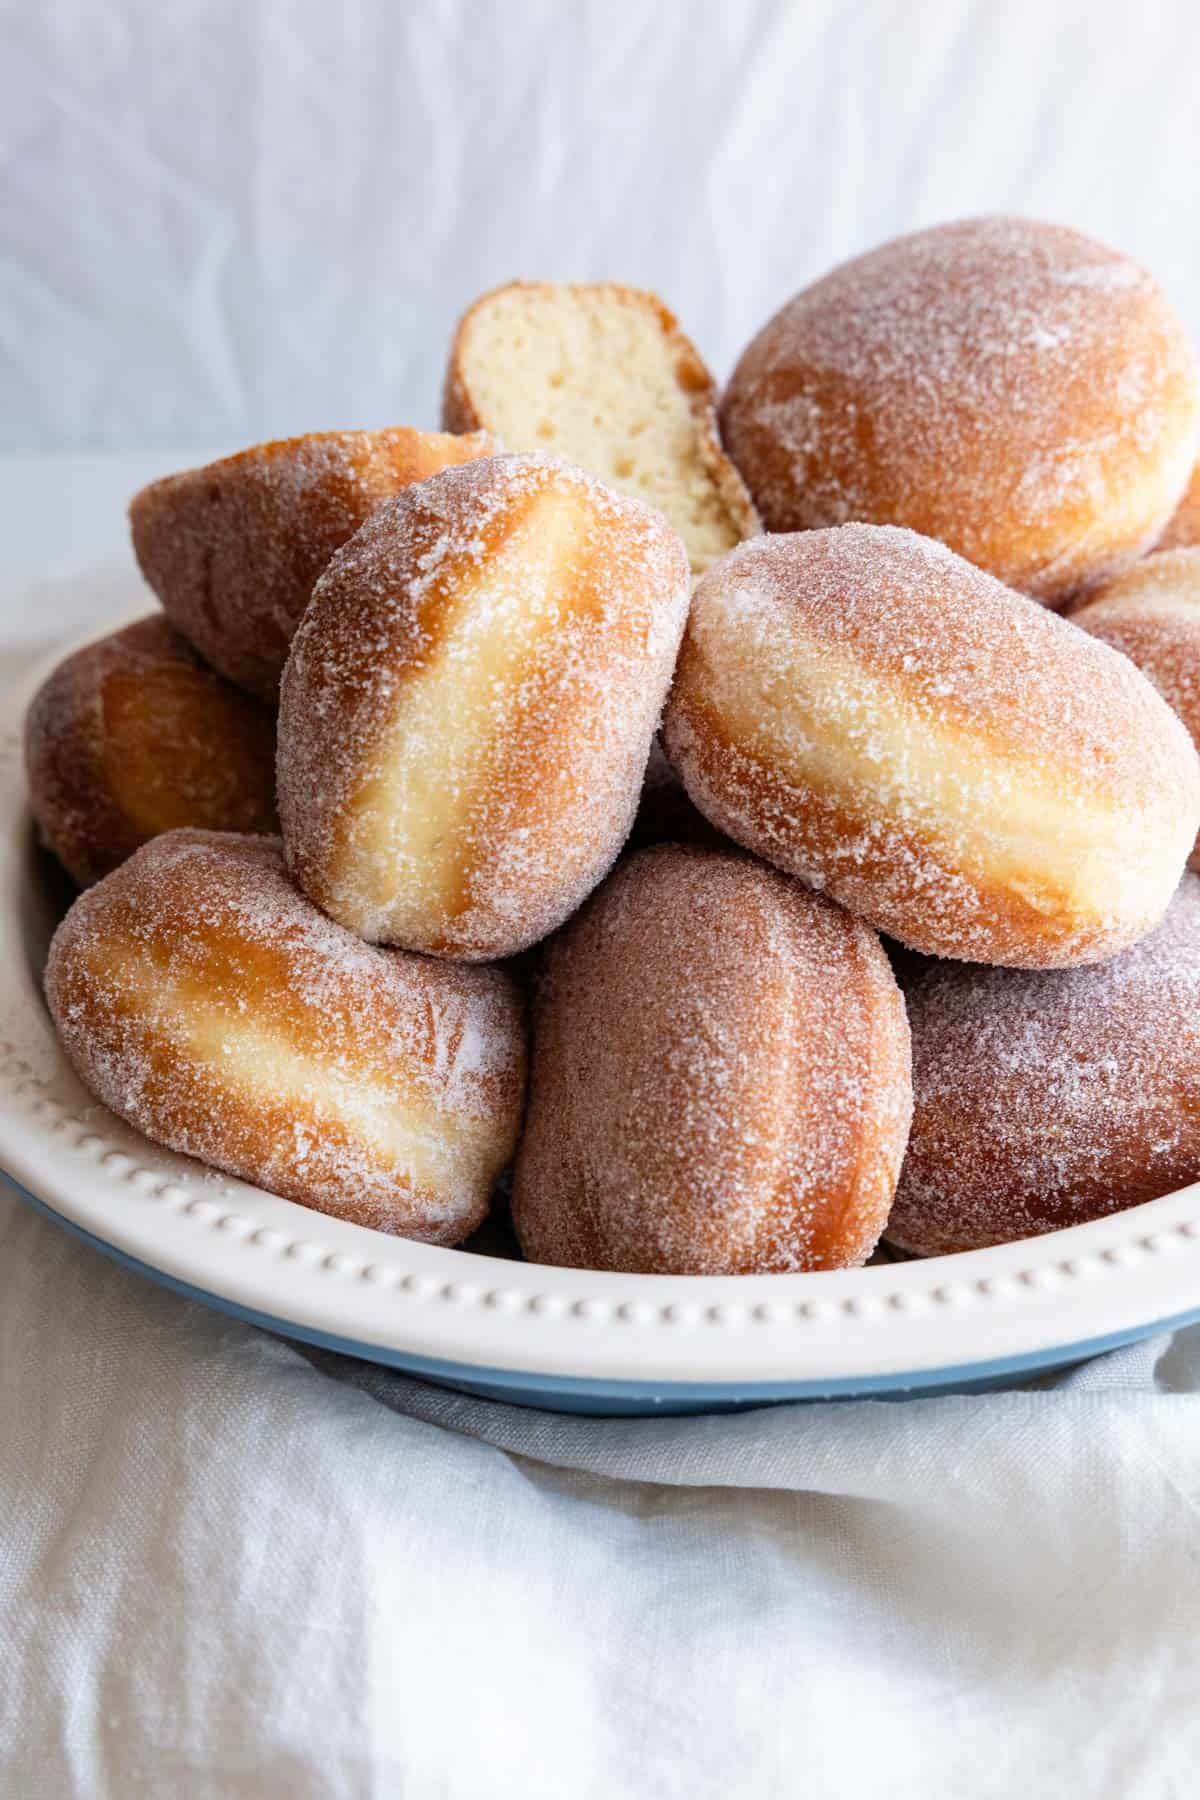 Golden-brown sugar coated doughnuts in a bowl.